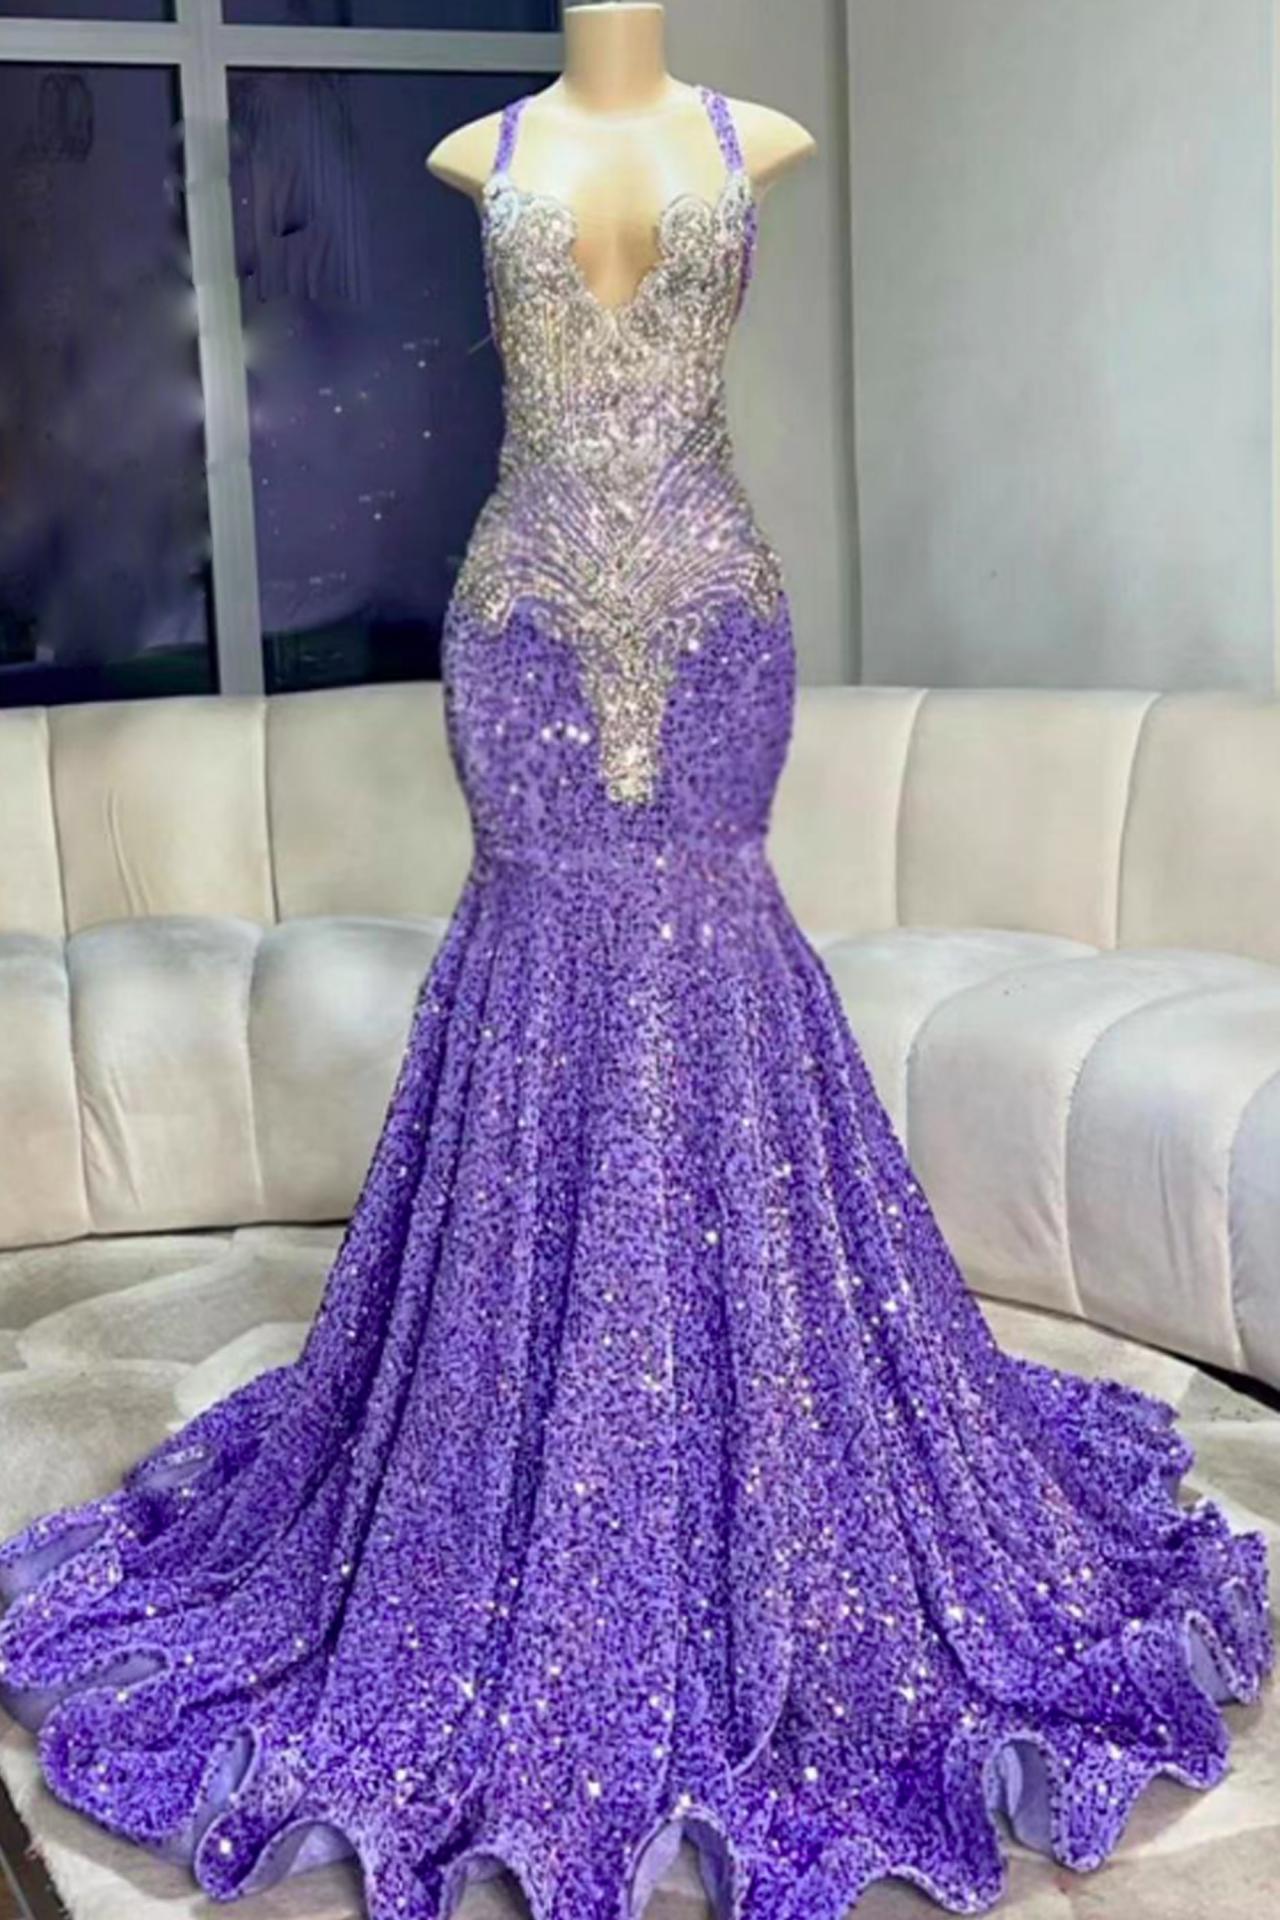 Purple Prom Dresses, Vestidos De Fiesta, Diamonds Prom Dresses, Robes De Soiree Femme, Luxury Birthday Party Dresses, Evening Gown For Women,